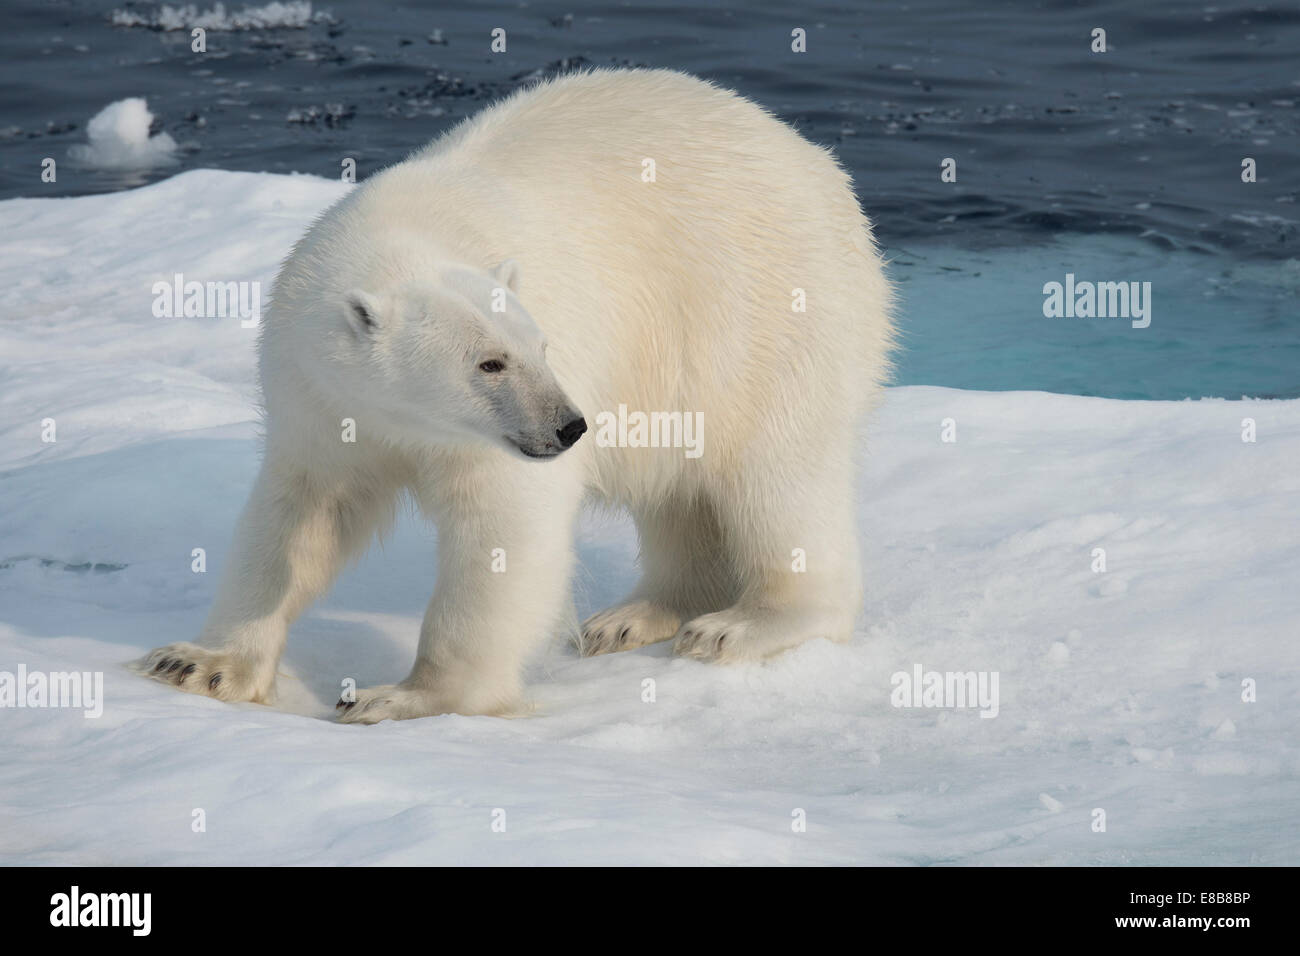 Male Polar Bear, Ursus maritimus, on an iceberg, Baffin Island, Canadian Arctic. Stock Photo